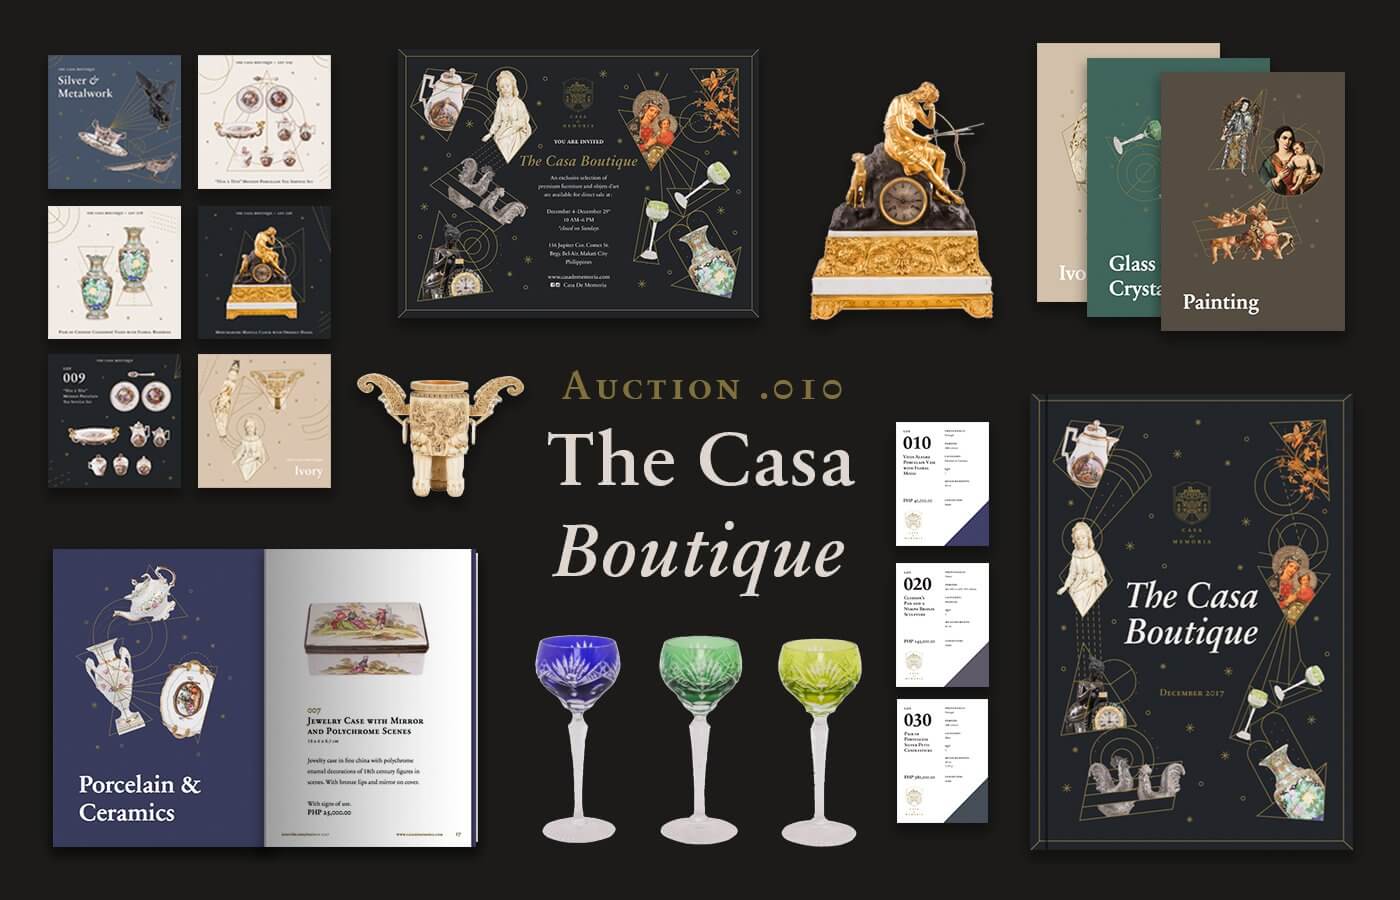 Campaign branding and collaterals designed for The Casa Boutique Auction for Casa de Memoria